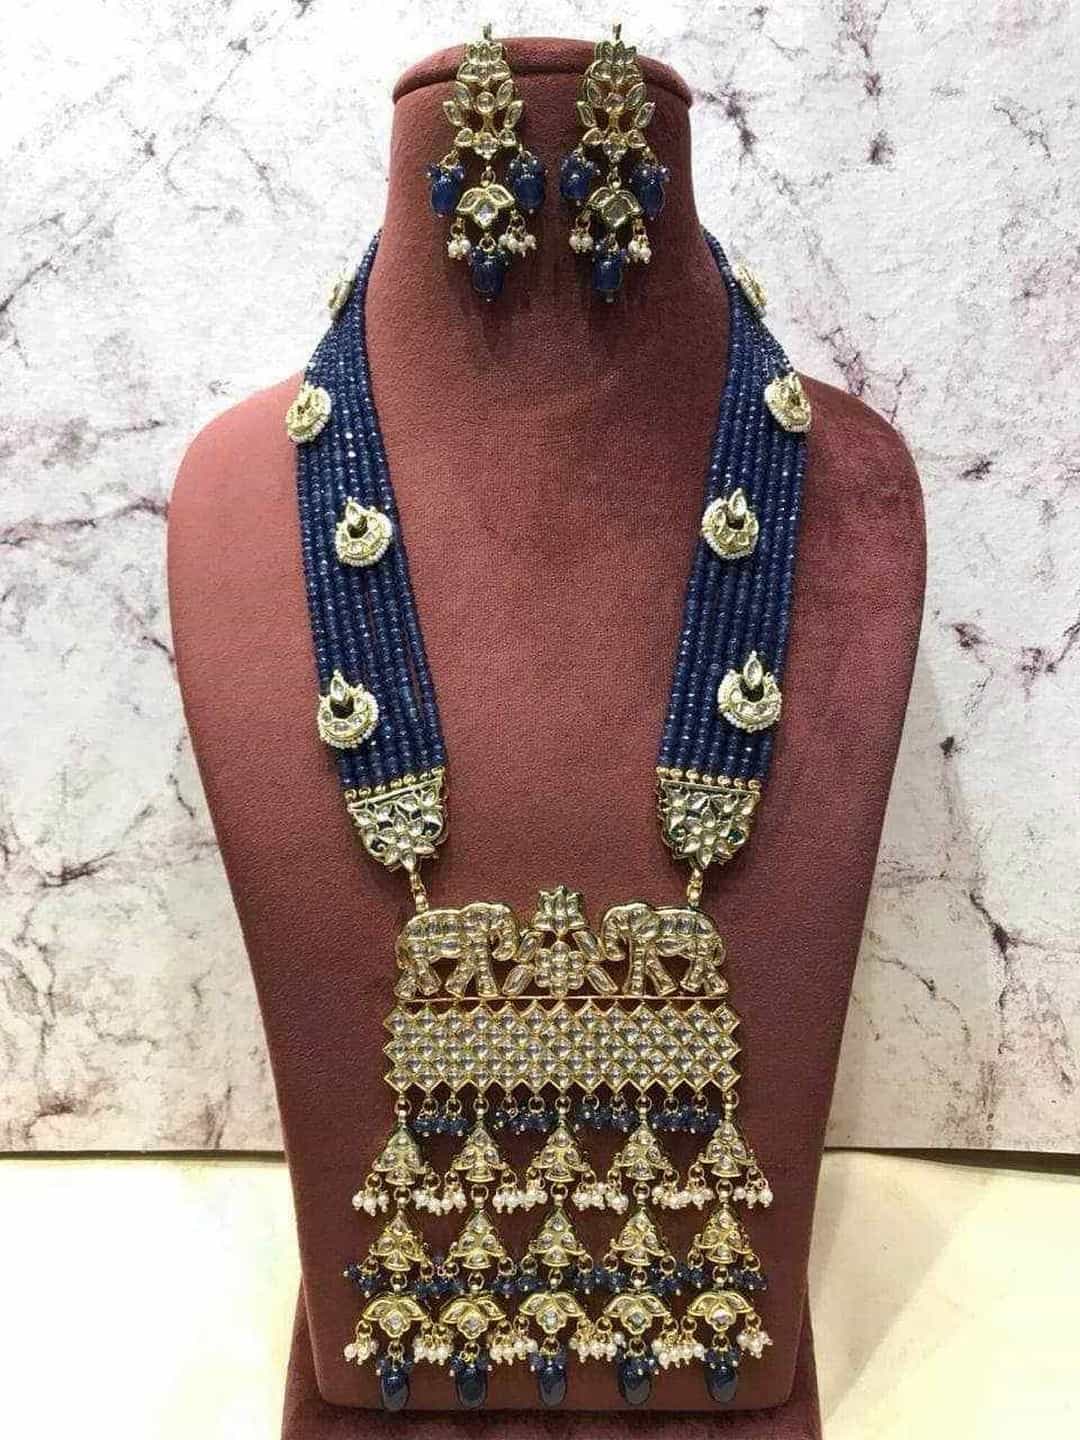 Ishhaara Dark Blue Masoom Minawala in Elephant Pendant Necklace